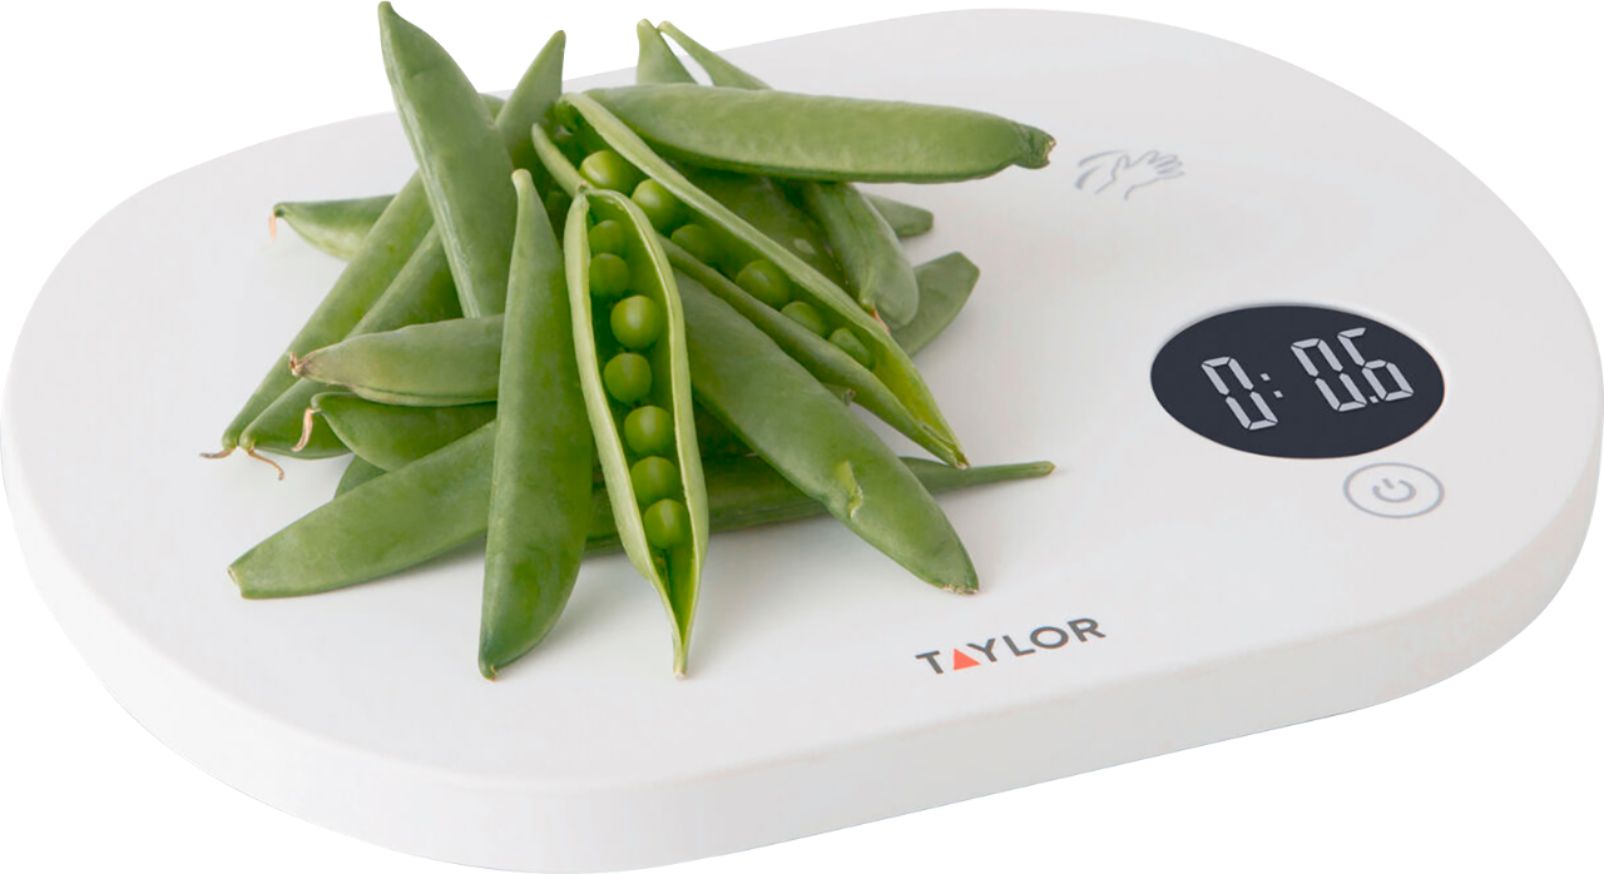 Taylor Waterproof Digital Kitchen 11 lb Food Scale Black